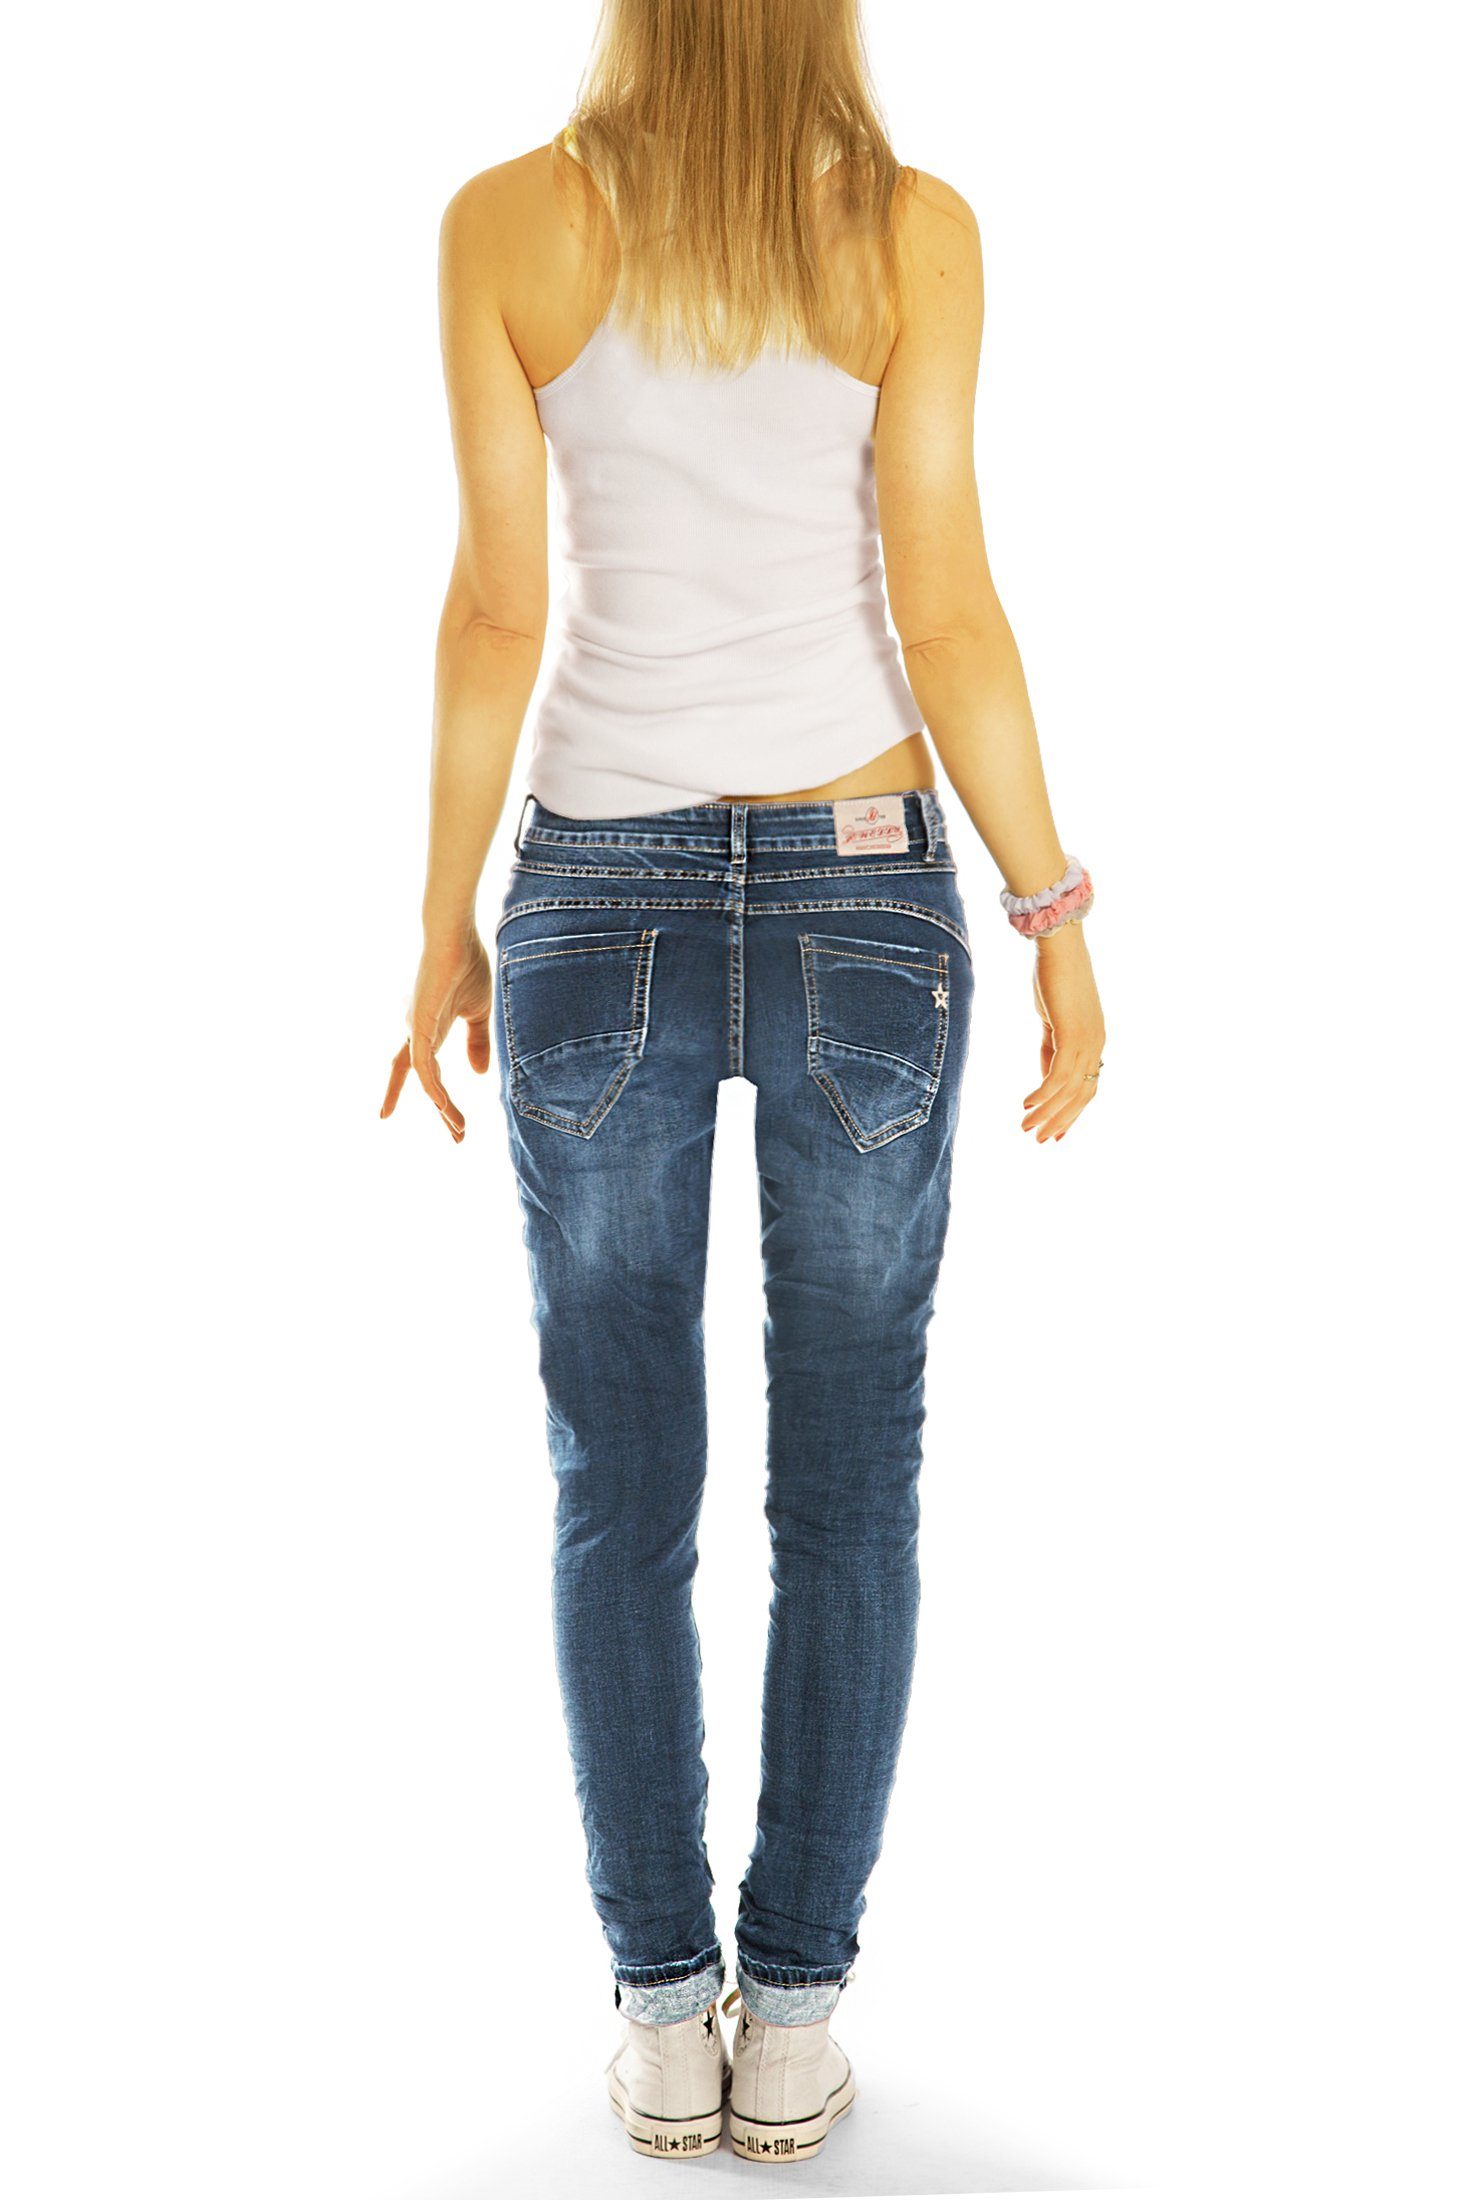 5-Pocket-Style - Designer Hose mit j14L-3 styled Medium Tapered Damen be - Stretchjeans Waist Jeans, Stretch-Anteil, lockere Tapered-fit-Jeans